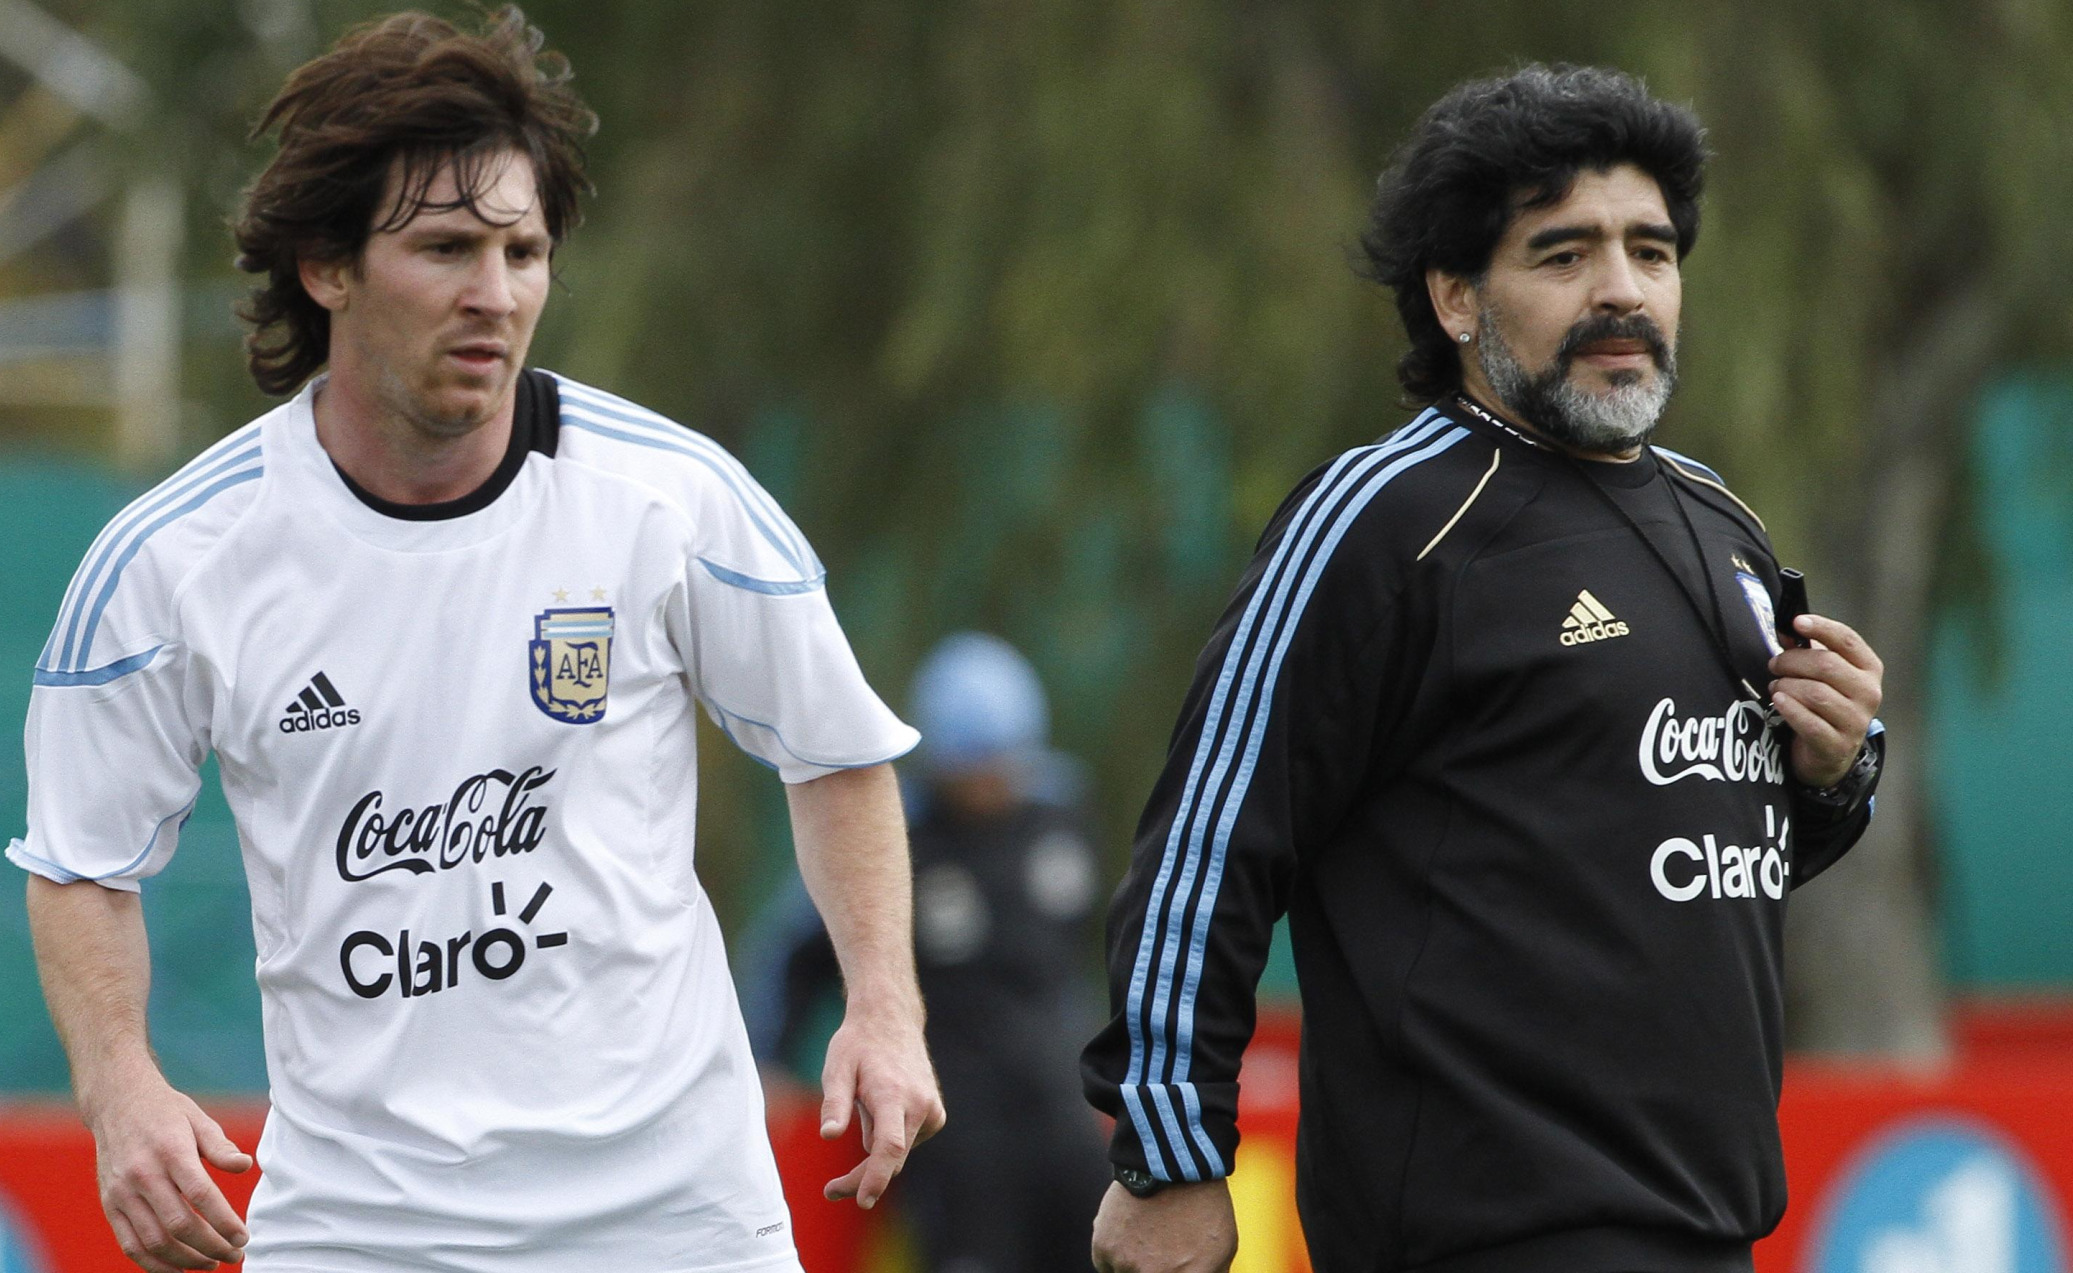 Fotbolls-VM, Diego Maradona, Lionel Messi, VM i Sydafrika, argentina